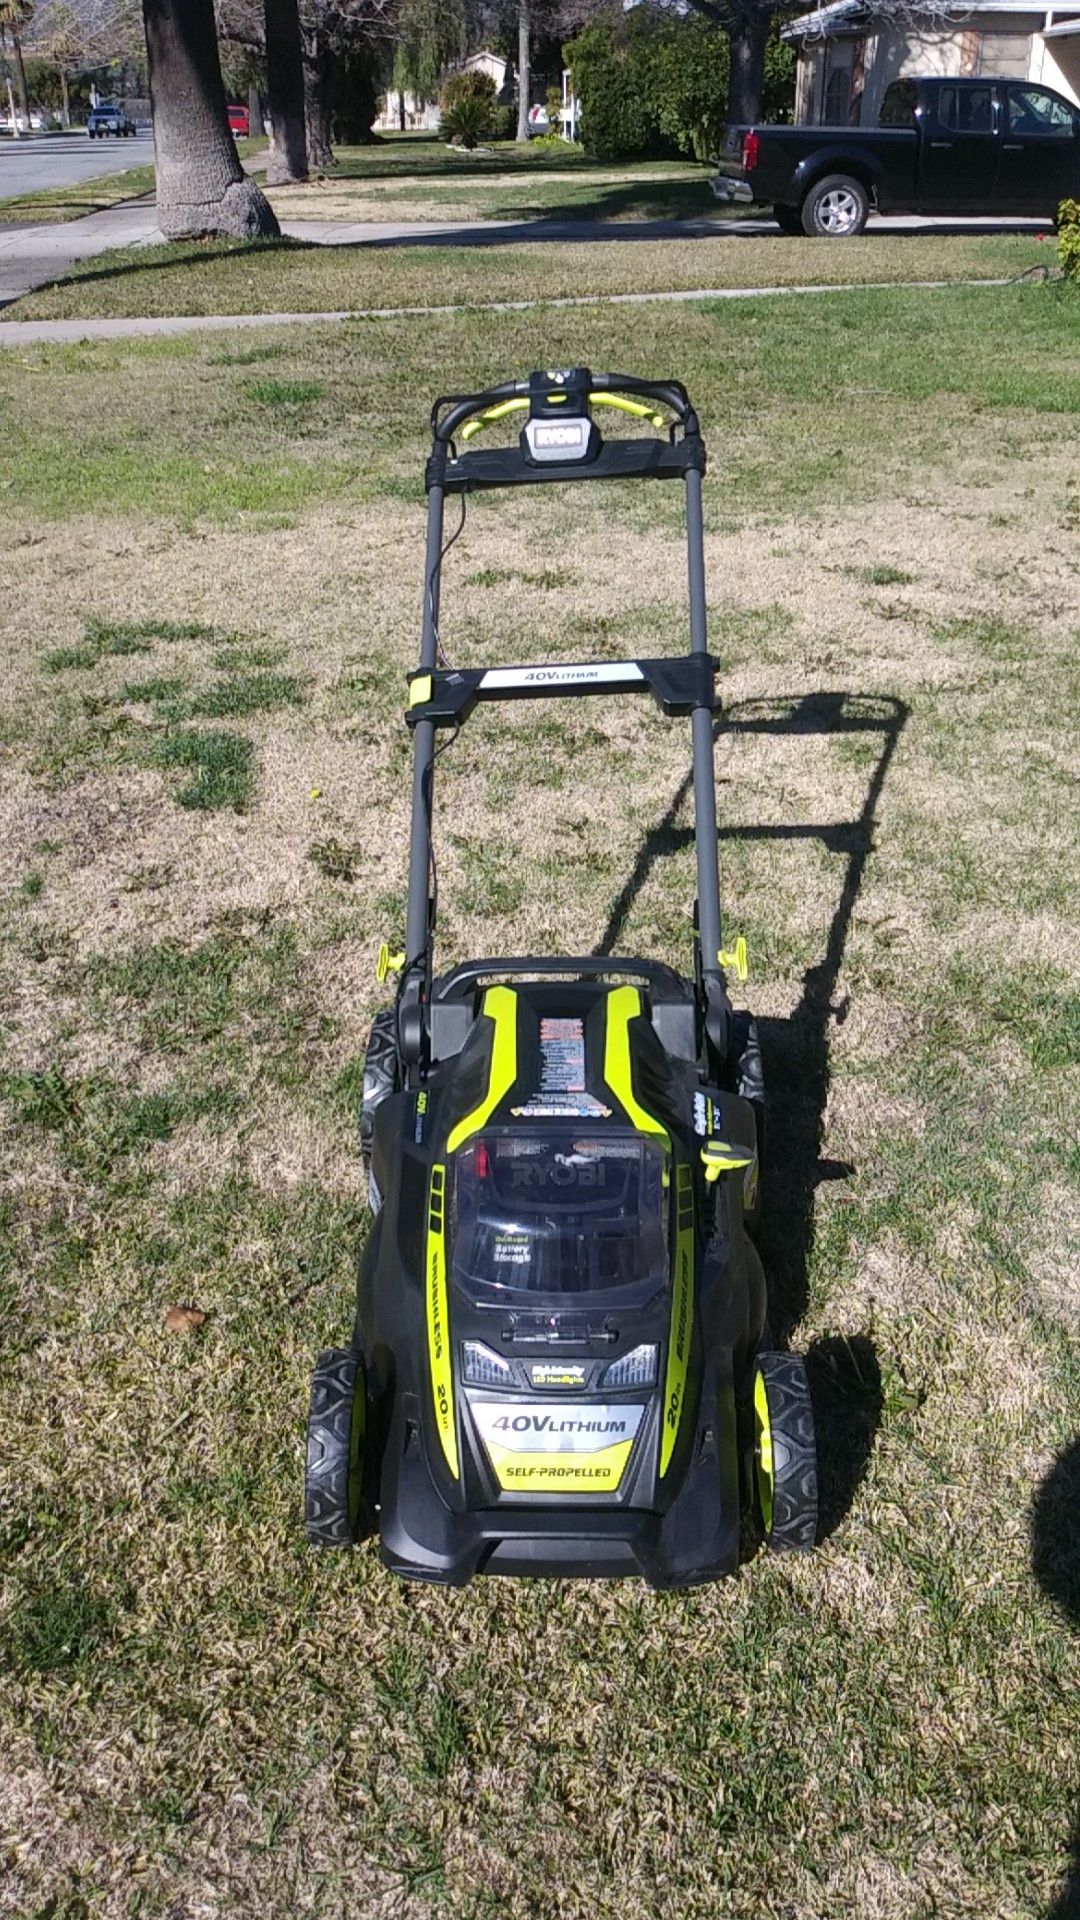 Ryobi brand new 40 volt lithium self-propelled lawn mower